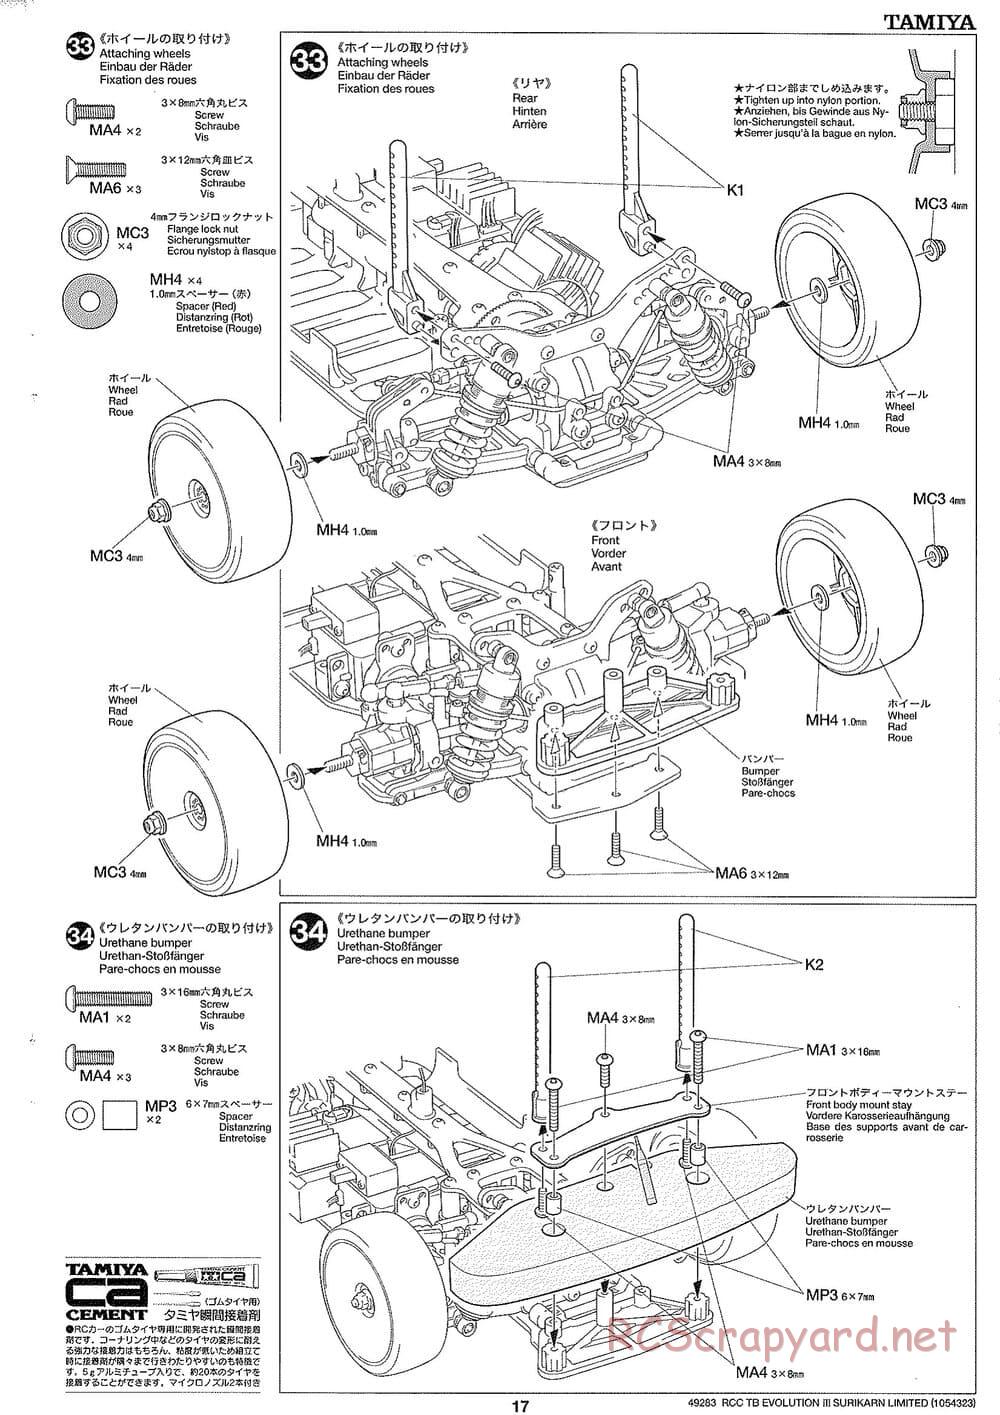 Tamiya - TB Evolution III Surikarn Limited Chassis - Manual - Page 17